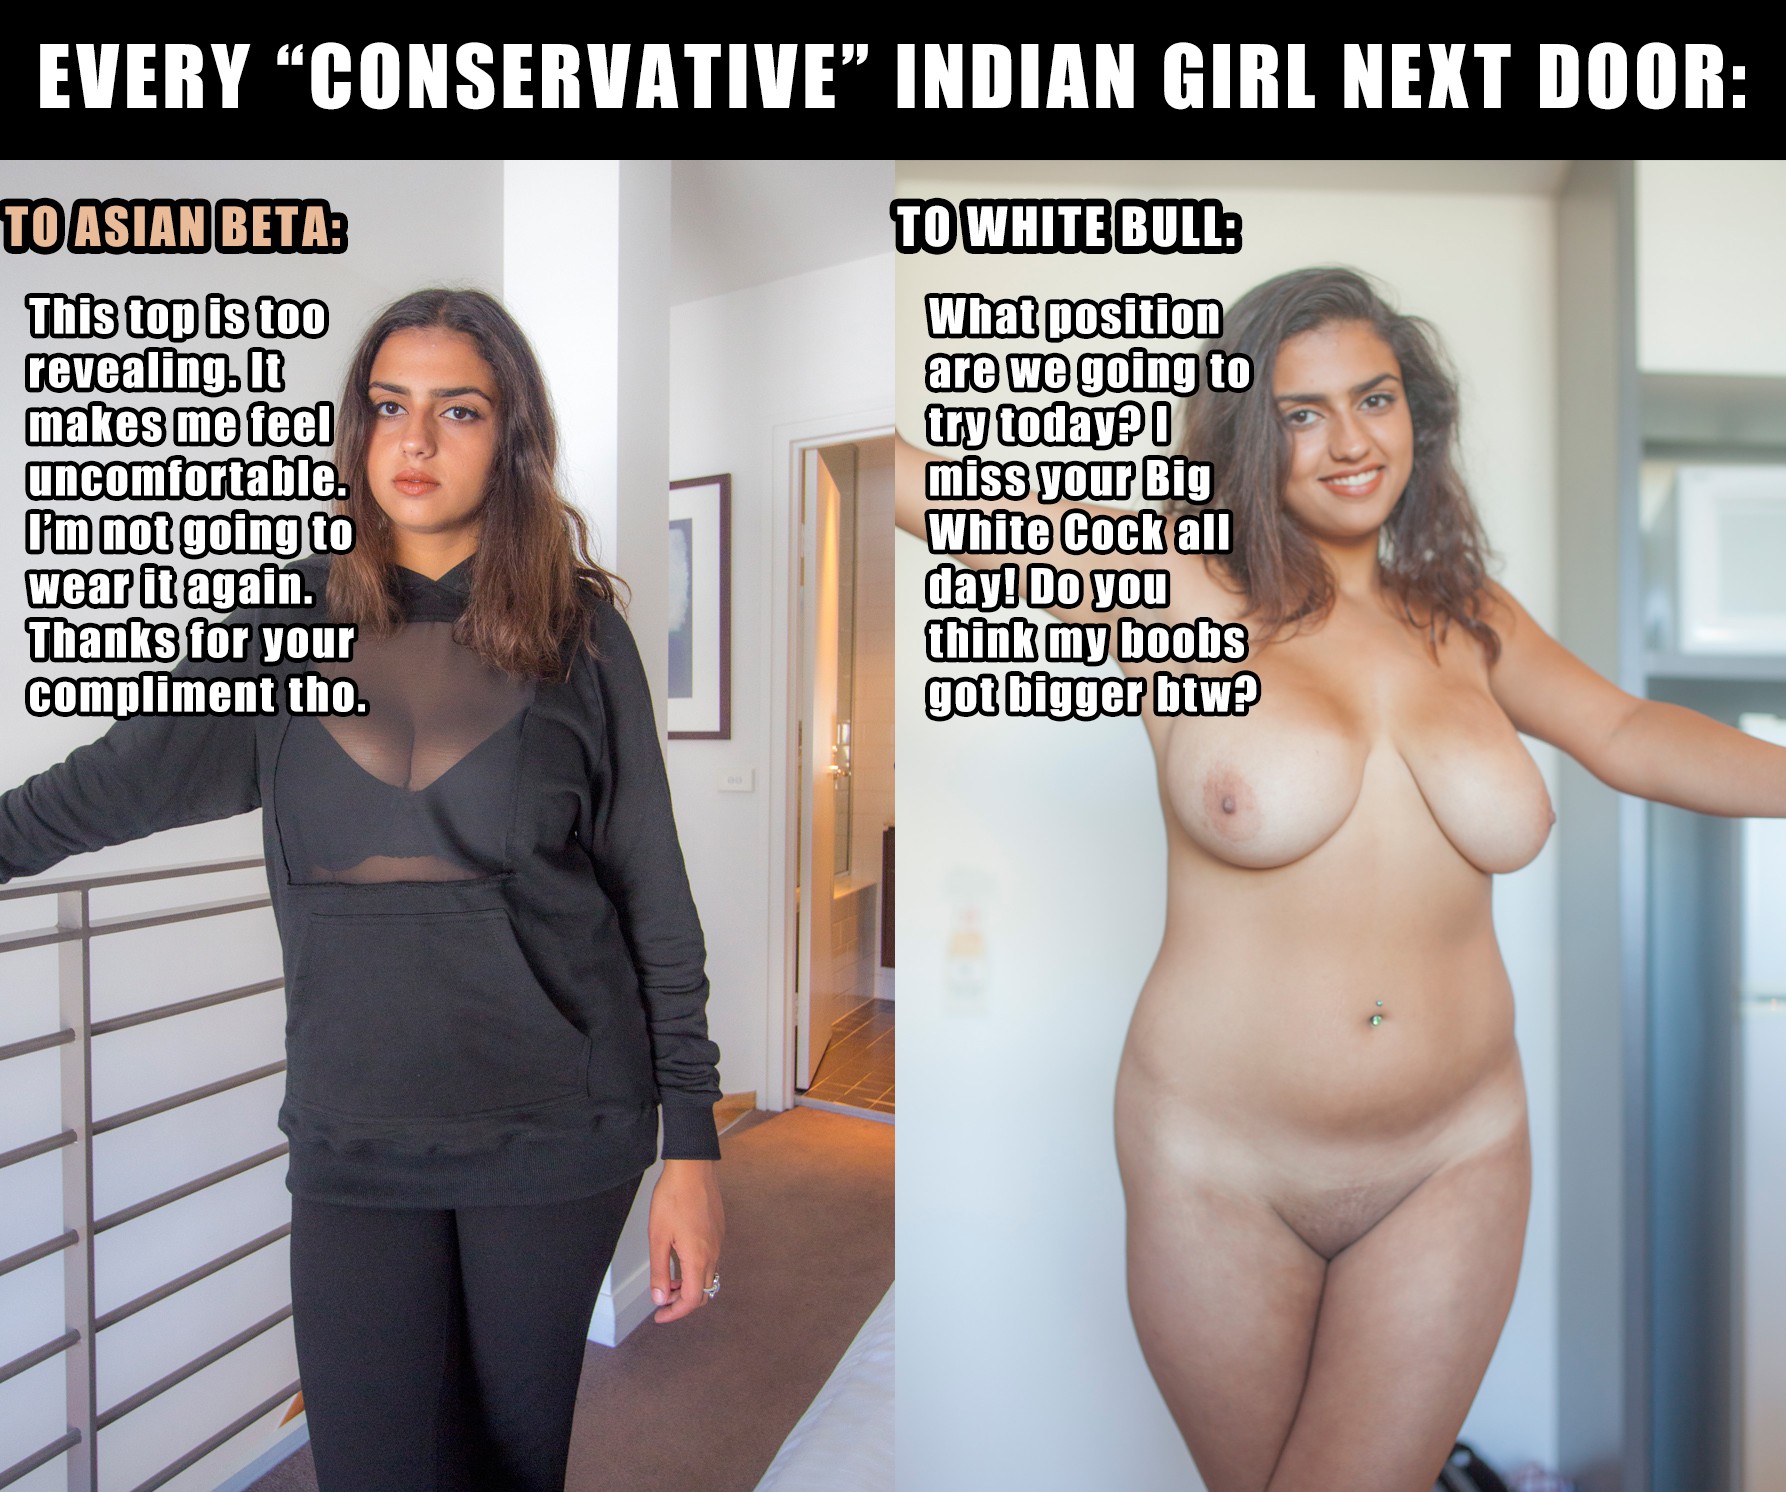 American Indian Porn Captions - Indian girl next door reacts to white bull cock vs beta dick - Freakden